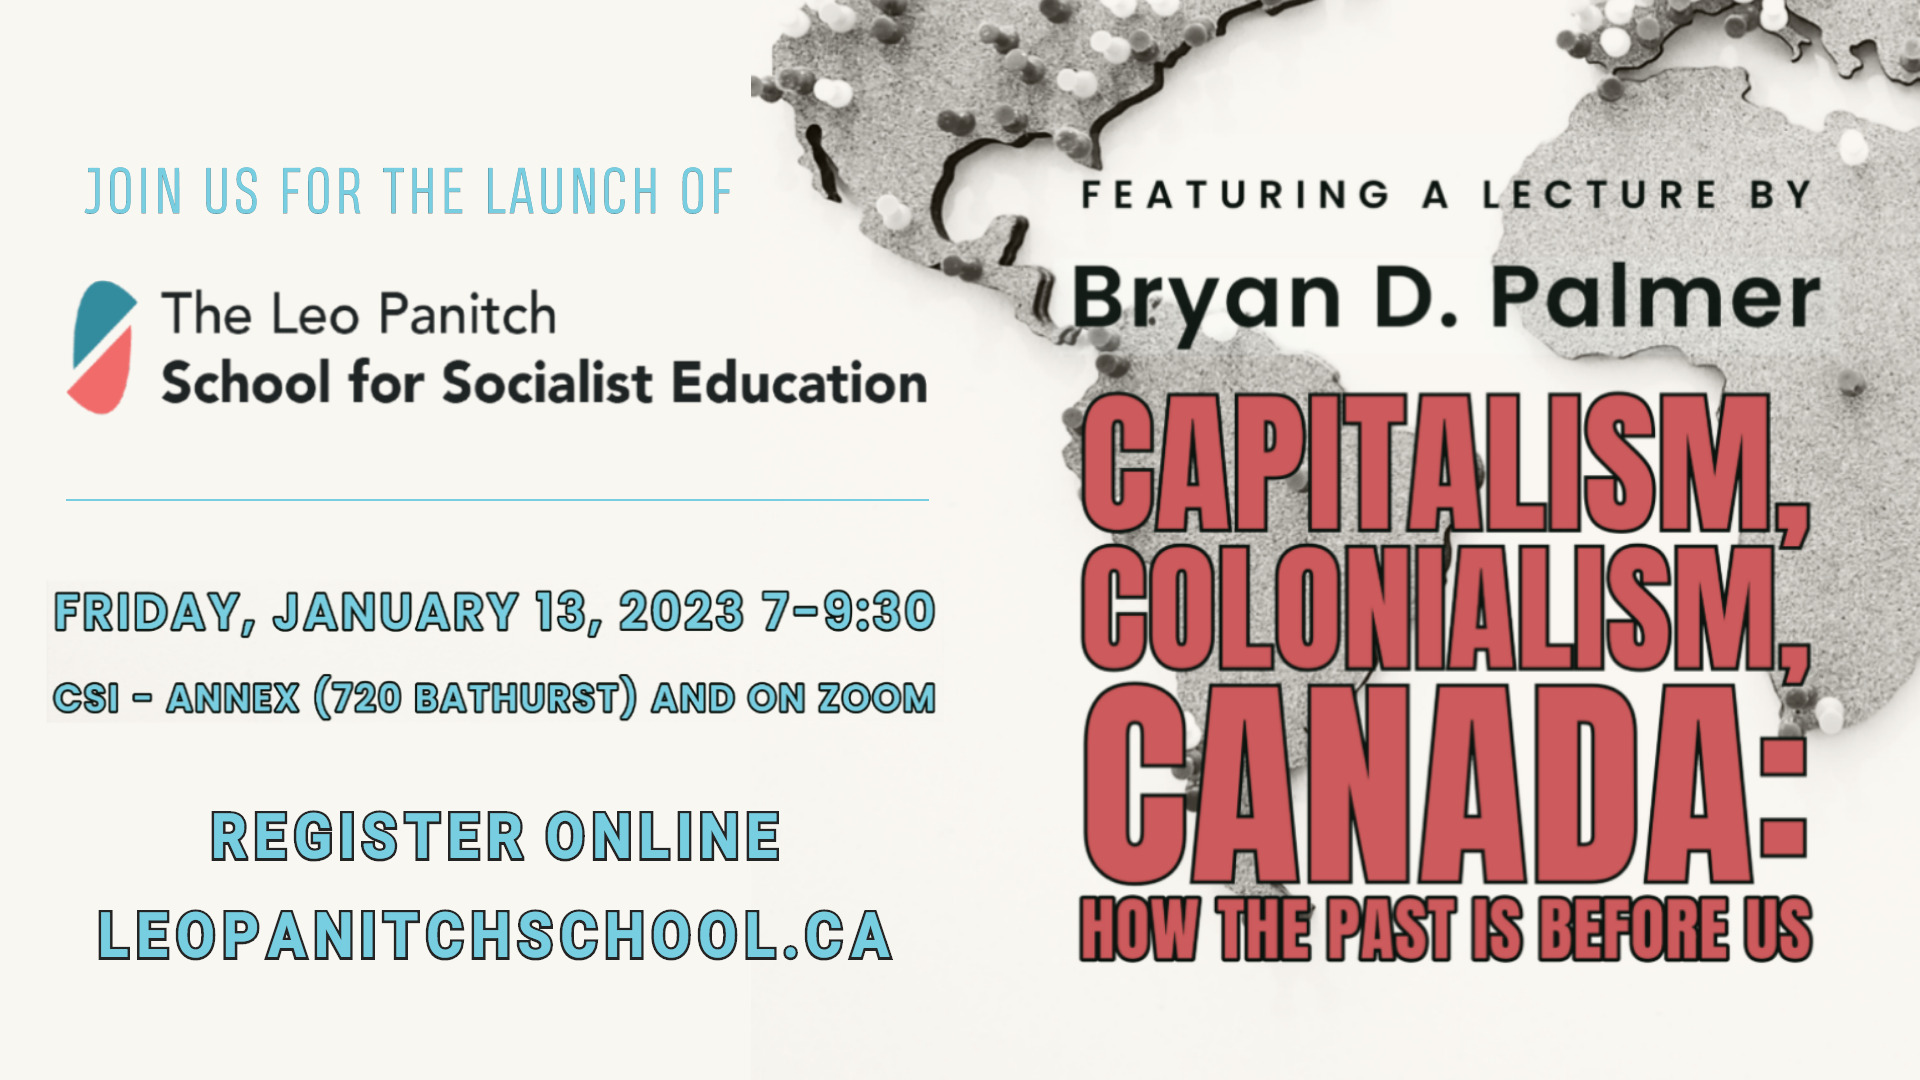 Leo Panitch School for Socialist Education Launch - Feat. Bryan D. Palmer